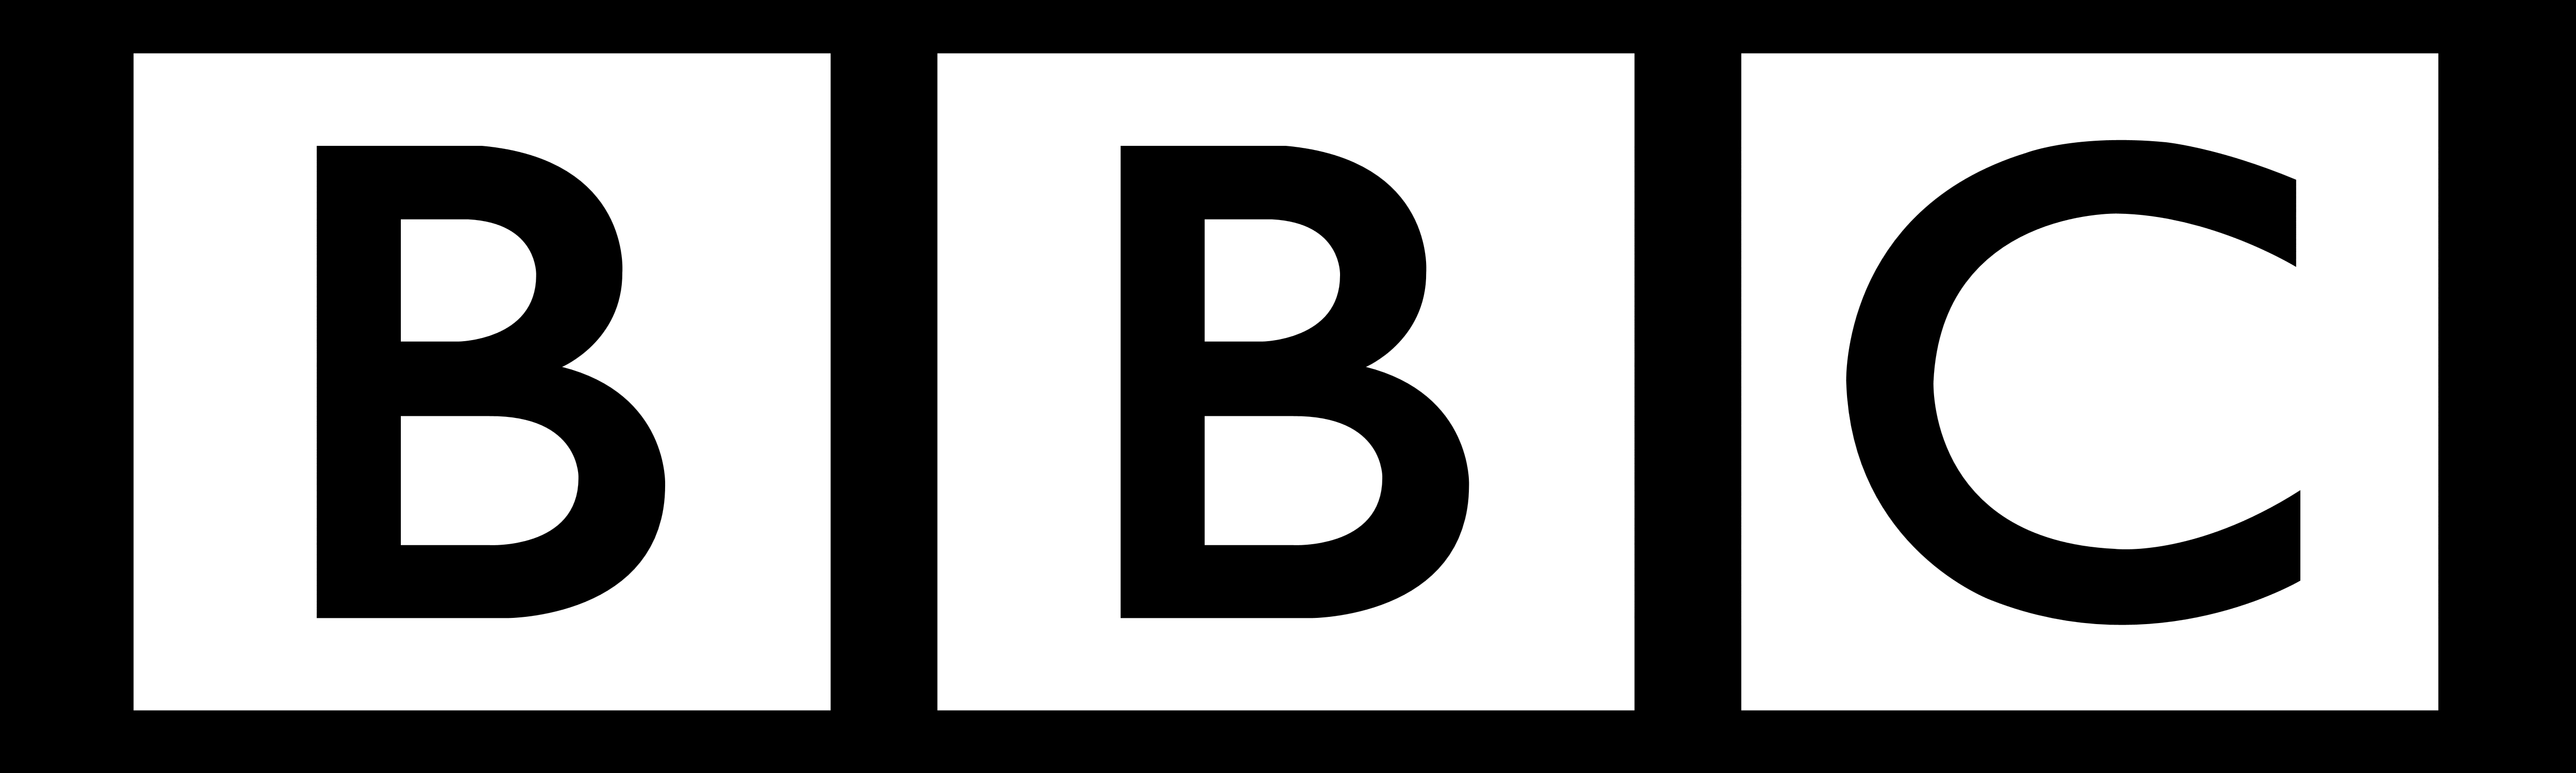 Bbc Logo Png And Bbc Logo Tra